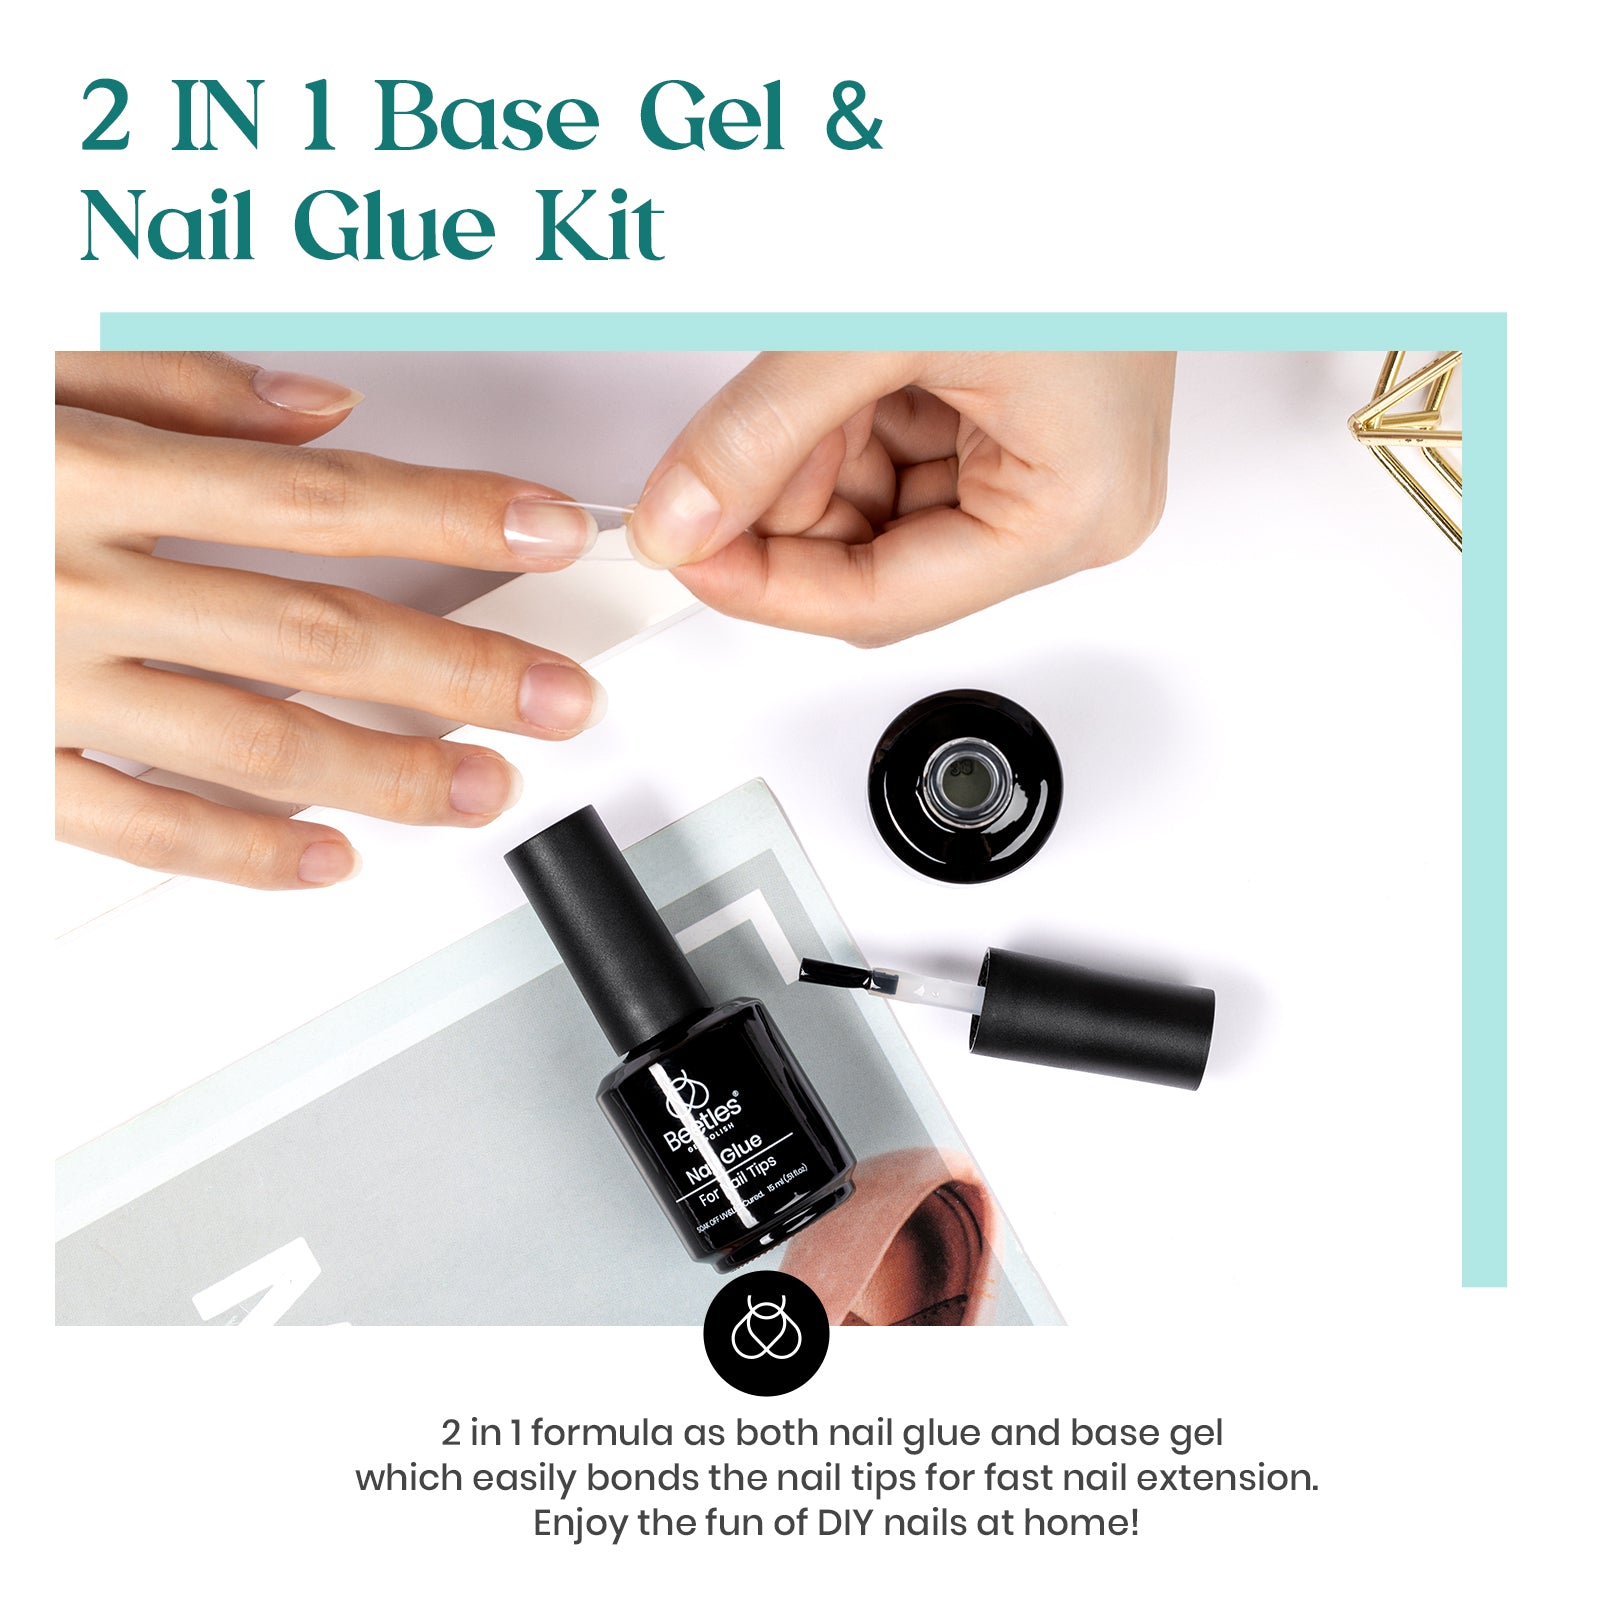 Beetles nail glue / gel x dupe. It works great! : r/Nails